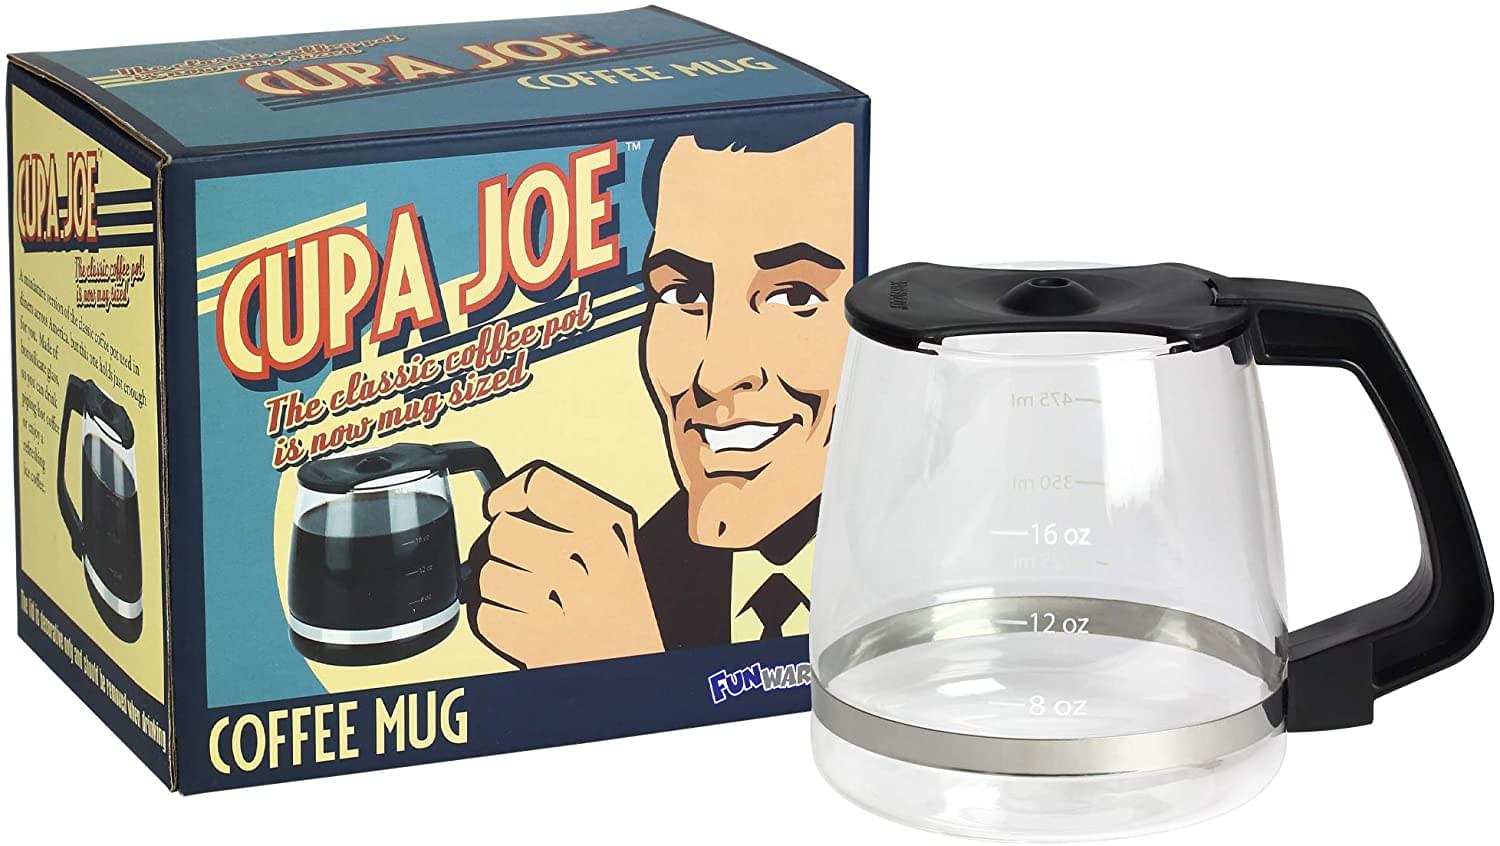 Cupa Joe 20oz Classic Coffee Pot Shaped Coffee Mug - image 3 of 4